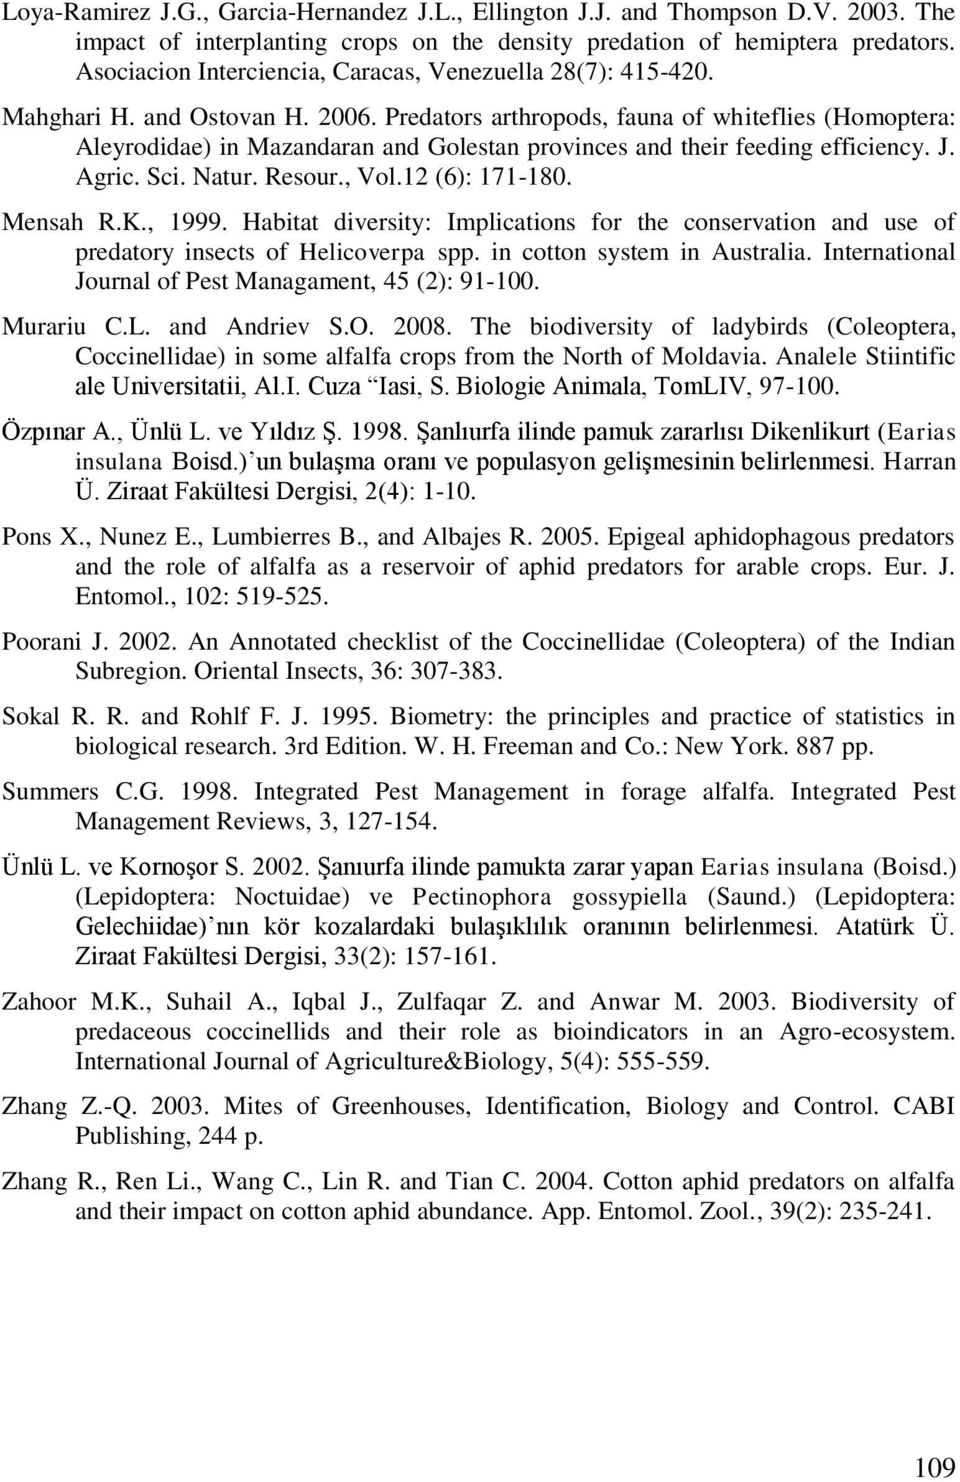 Predators arthropods, fauna of whiteflies (Homoptera: Aleyrodidae) in Mazandaran and Golestan provinces and their feeding efficiency. J. Agric. Sci. Natur. Resour., Vol.12 (6): 171-18. Mensah R.K.